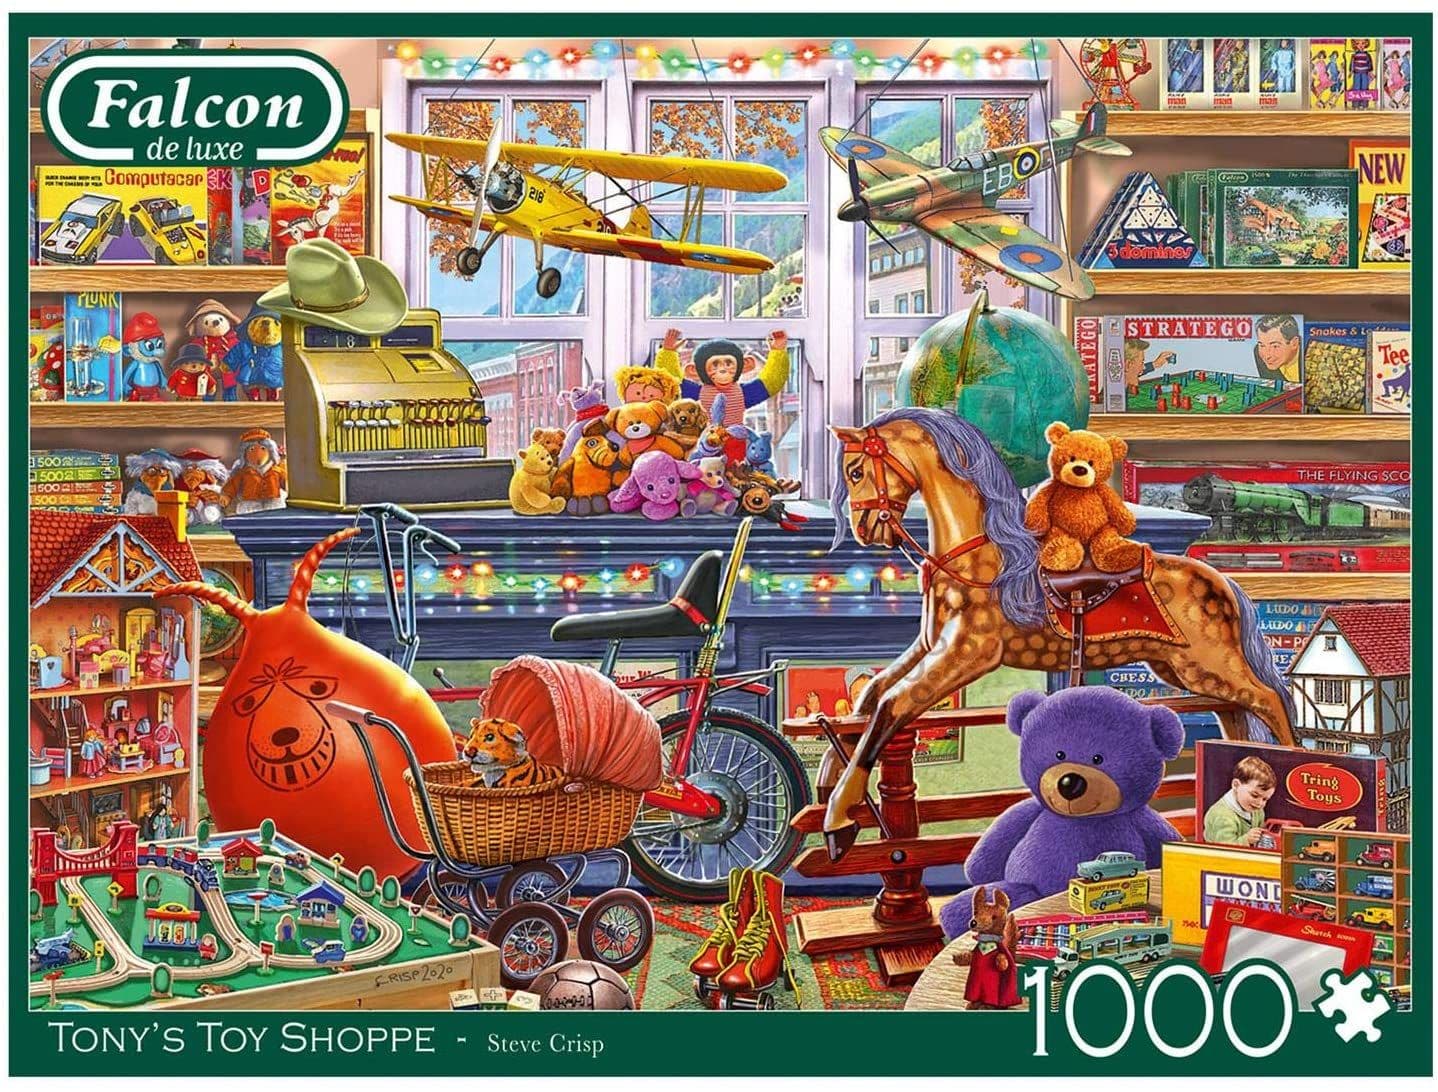 Falcon de luxe - Tony's Toy Shoppe - 1000 Piece Jigsaw Puzzle